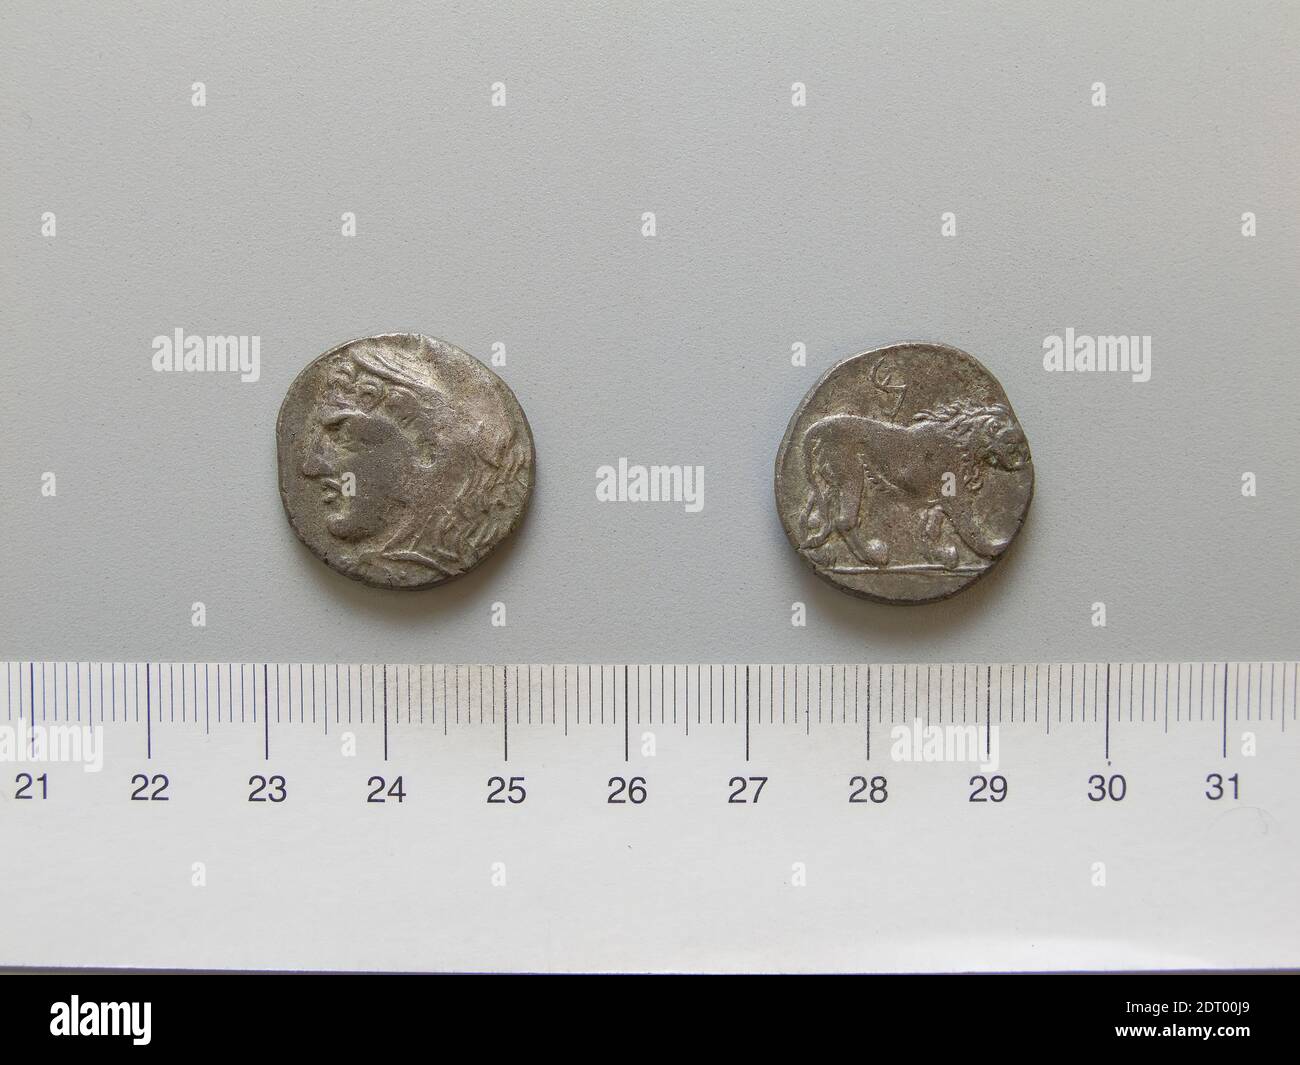 Mint: Libya, Didrachm from Libya, after c. 200 B.C., Silver, 7.19 g, 12:00, 21.5 mm, Made in Libya, Greek, after 3rd century B.C., Numismatics Stock Photo